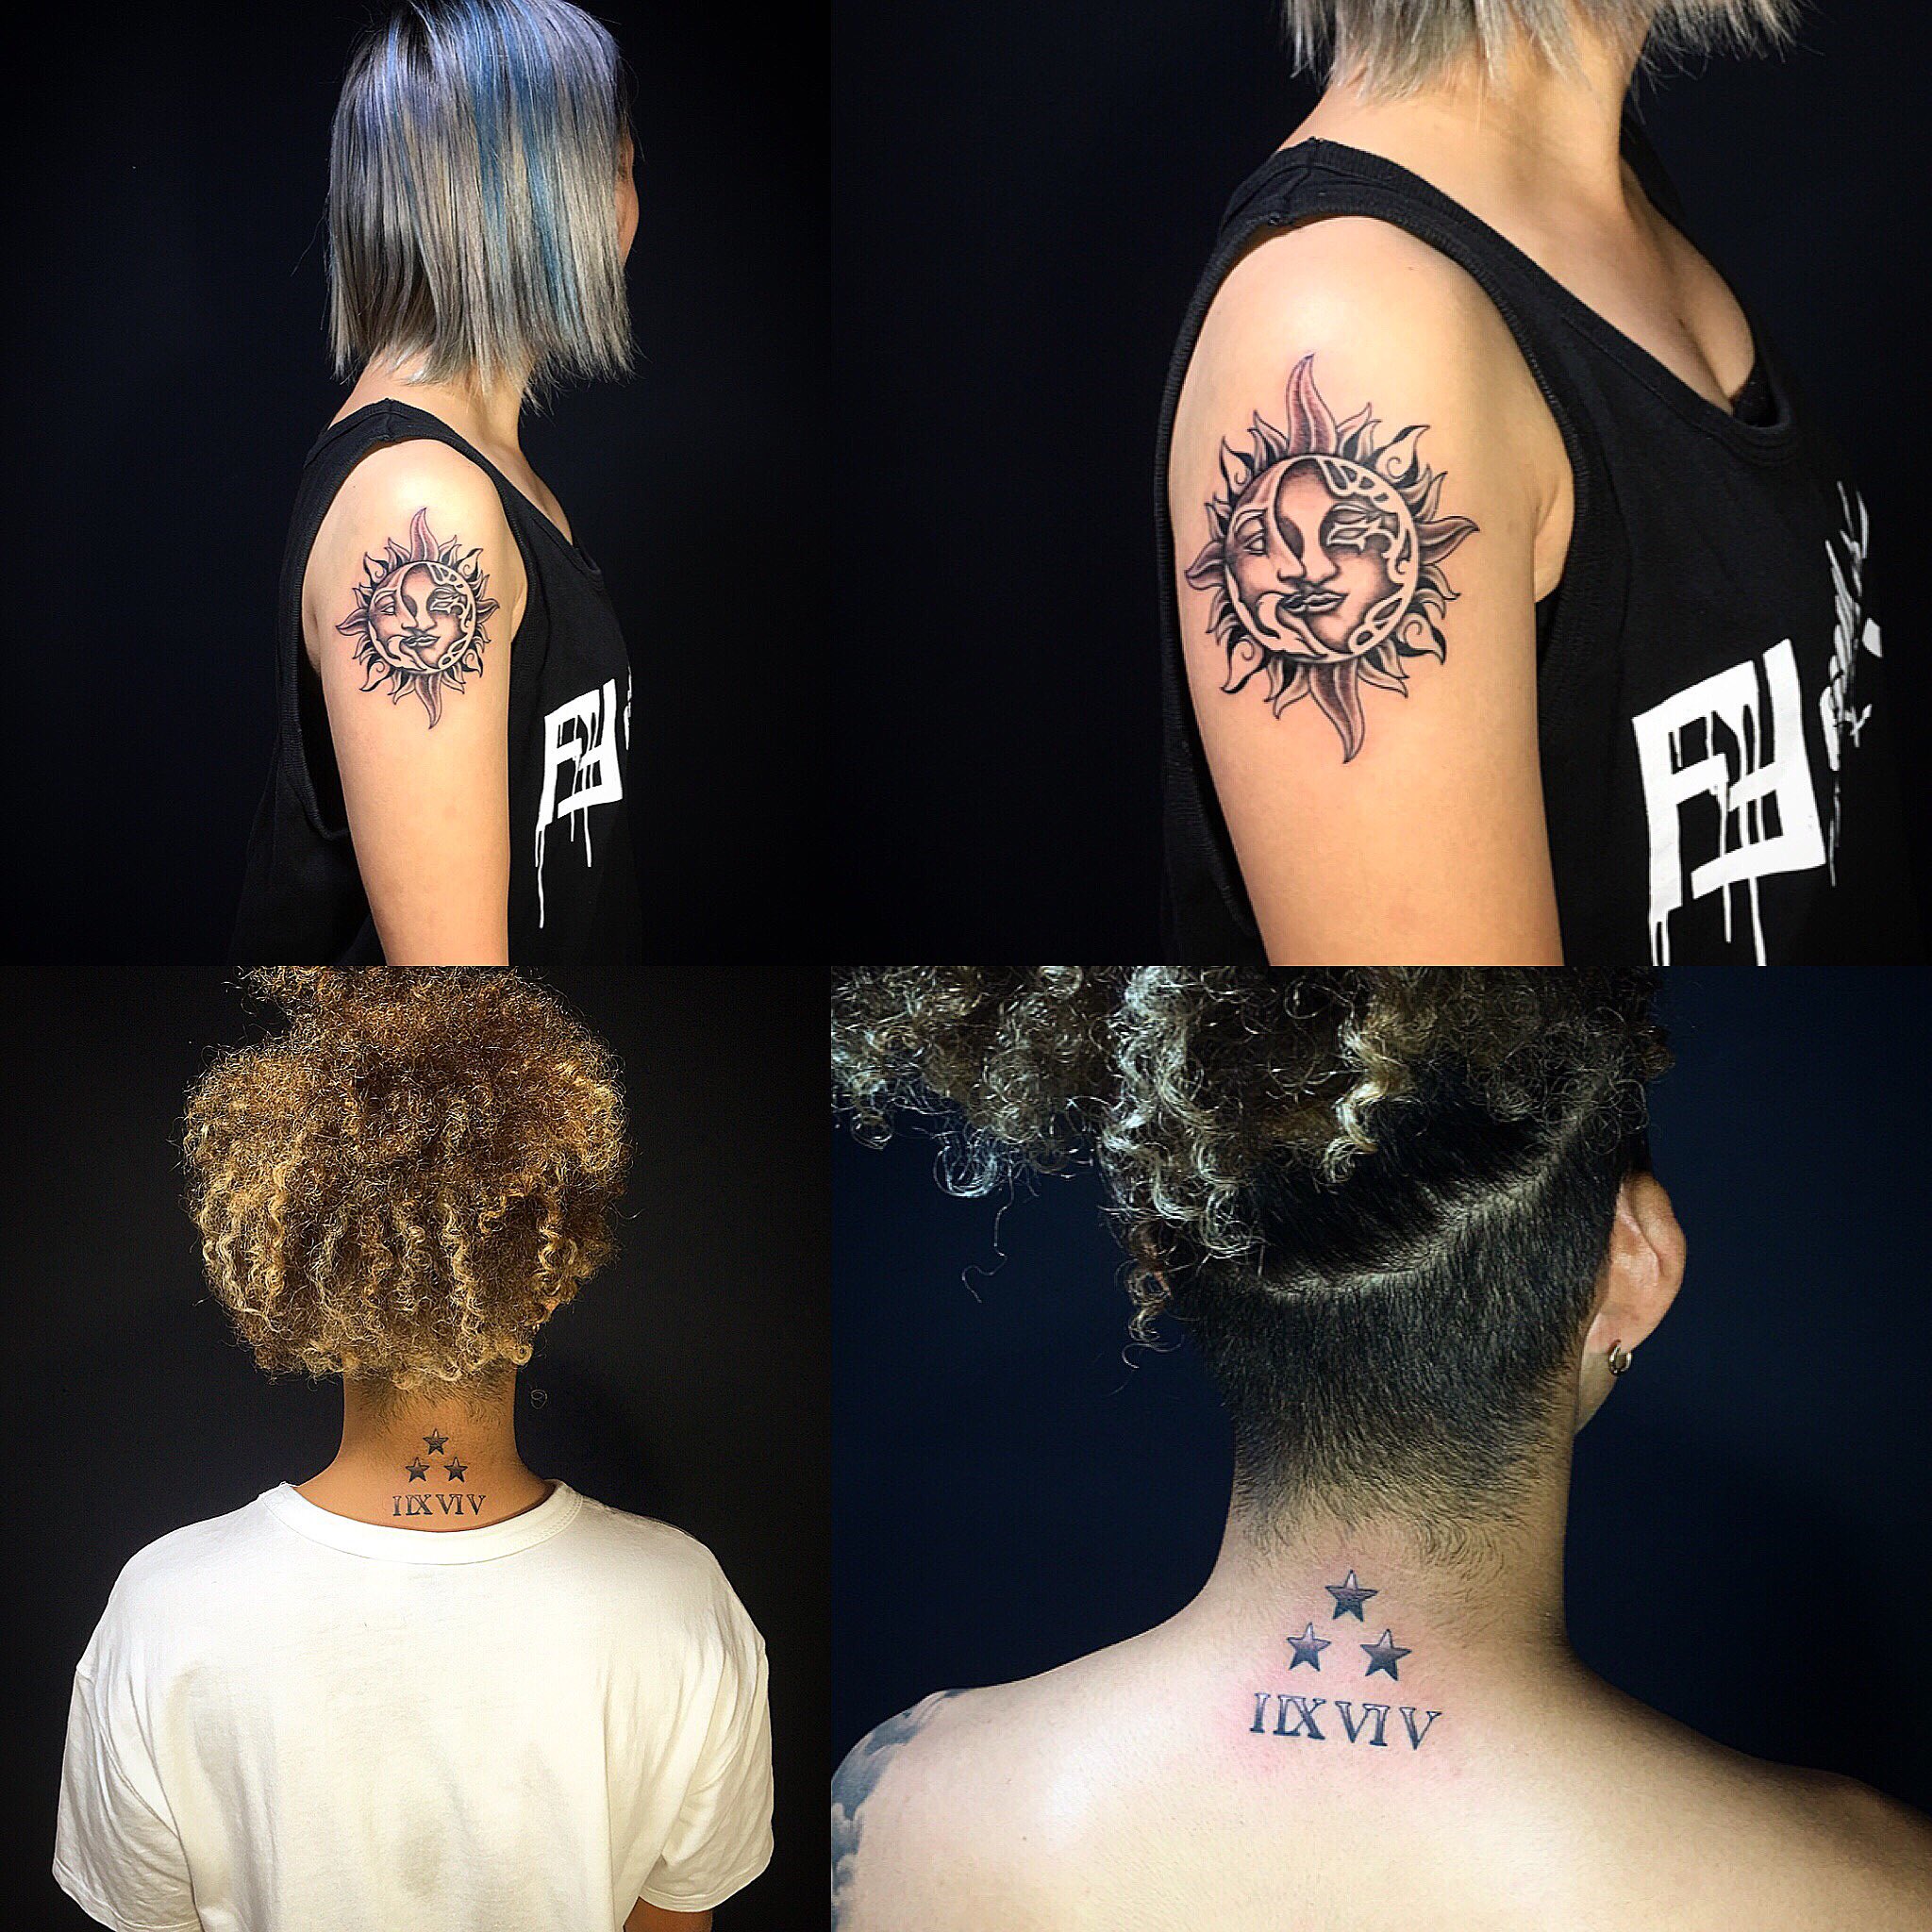 Twitter 上的 彫師美漸 Bizen Art Tattoo Studio 太陽と月 持ち込みデザインをアレンジ 星と英数字 タトゥー 太陽 月 英数字 星 刺青 彫師 美漸 Tattoo Art Fashion T Co 0qnt07tpvi Twitter